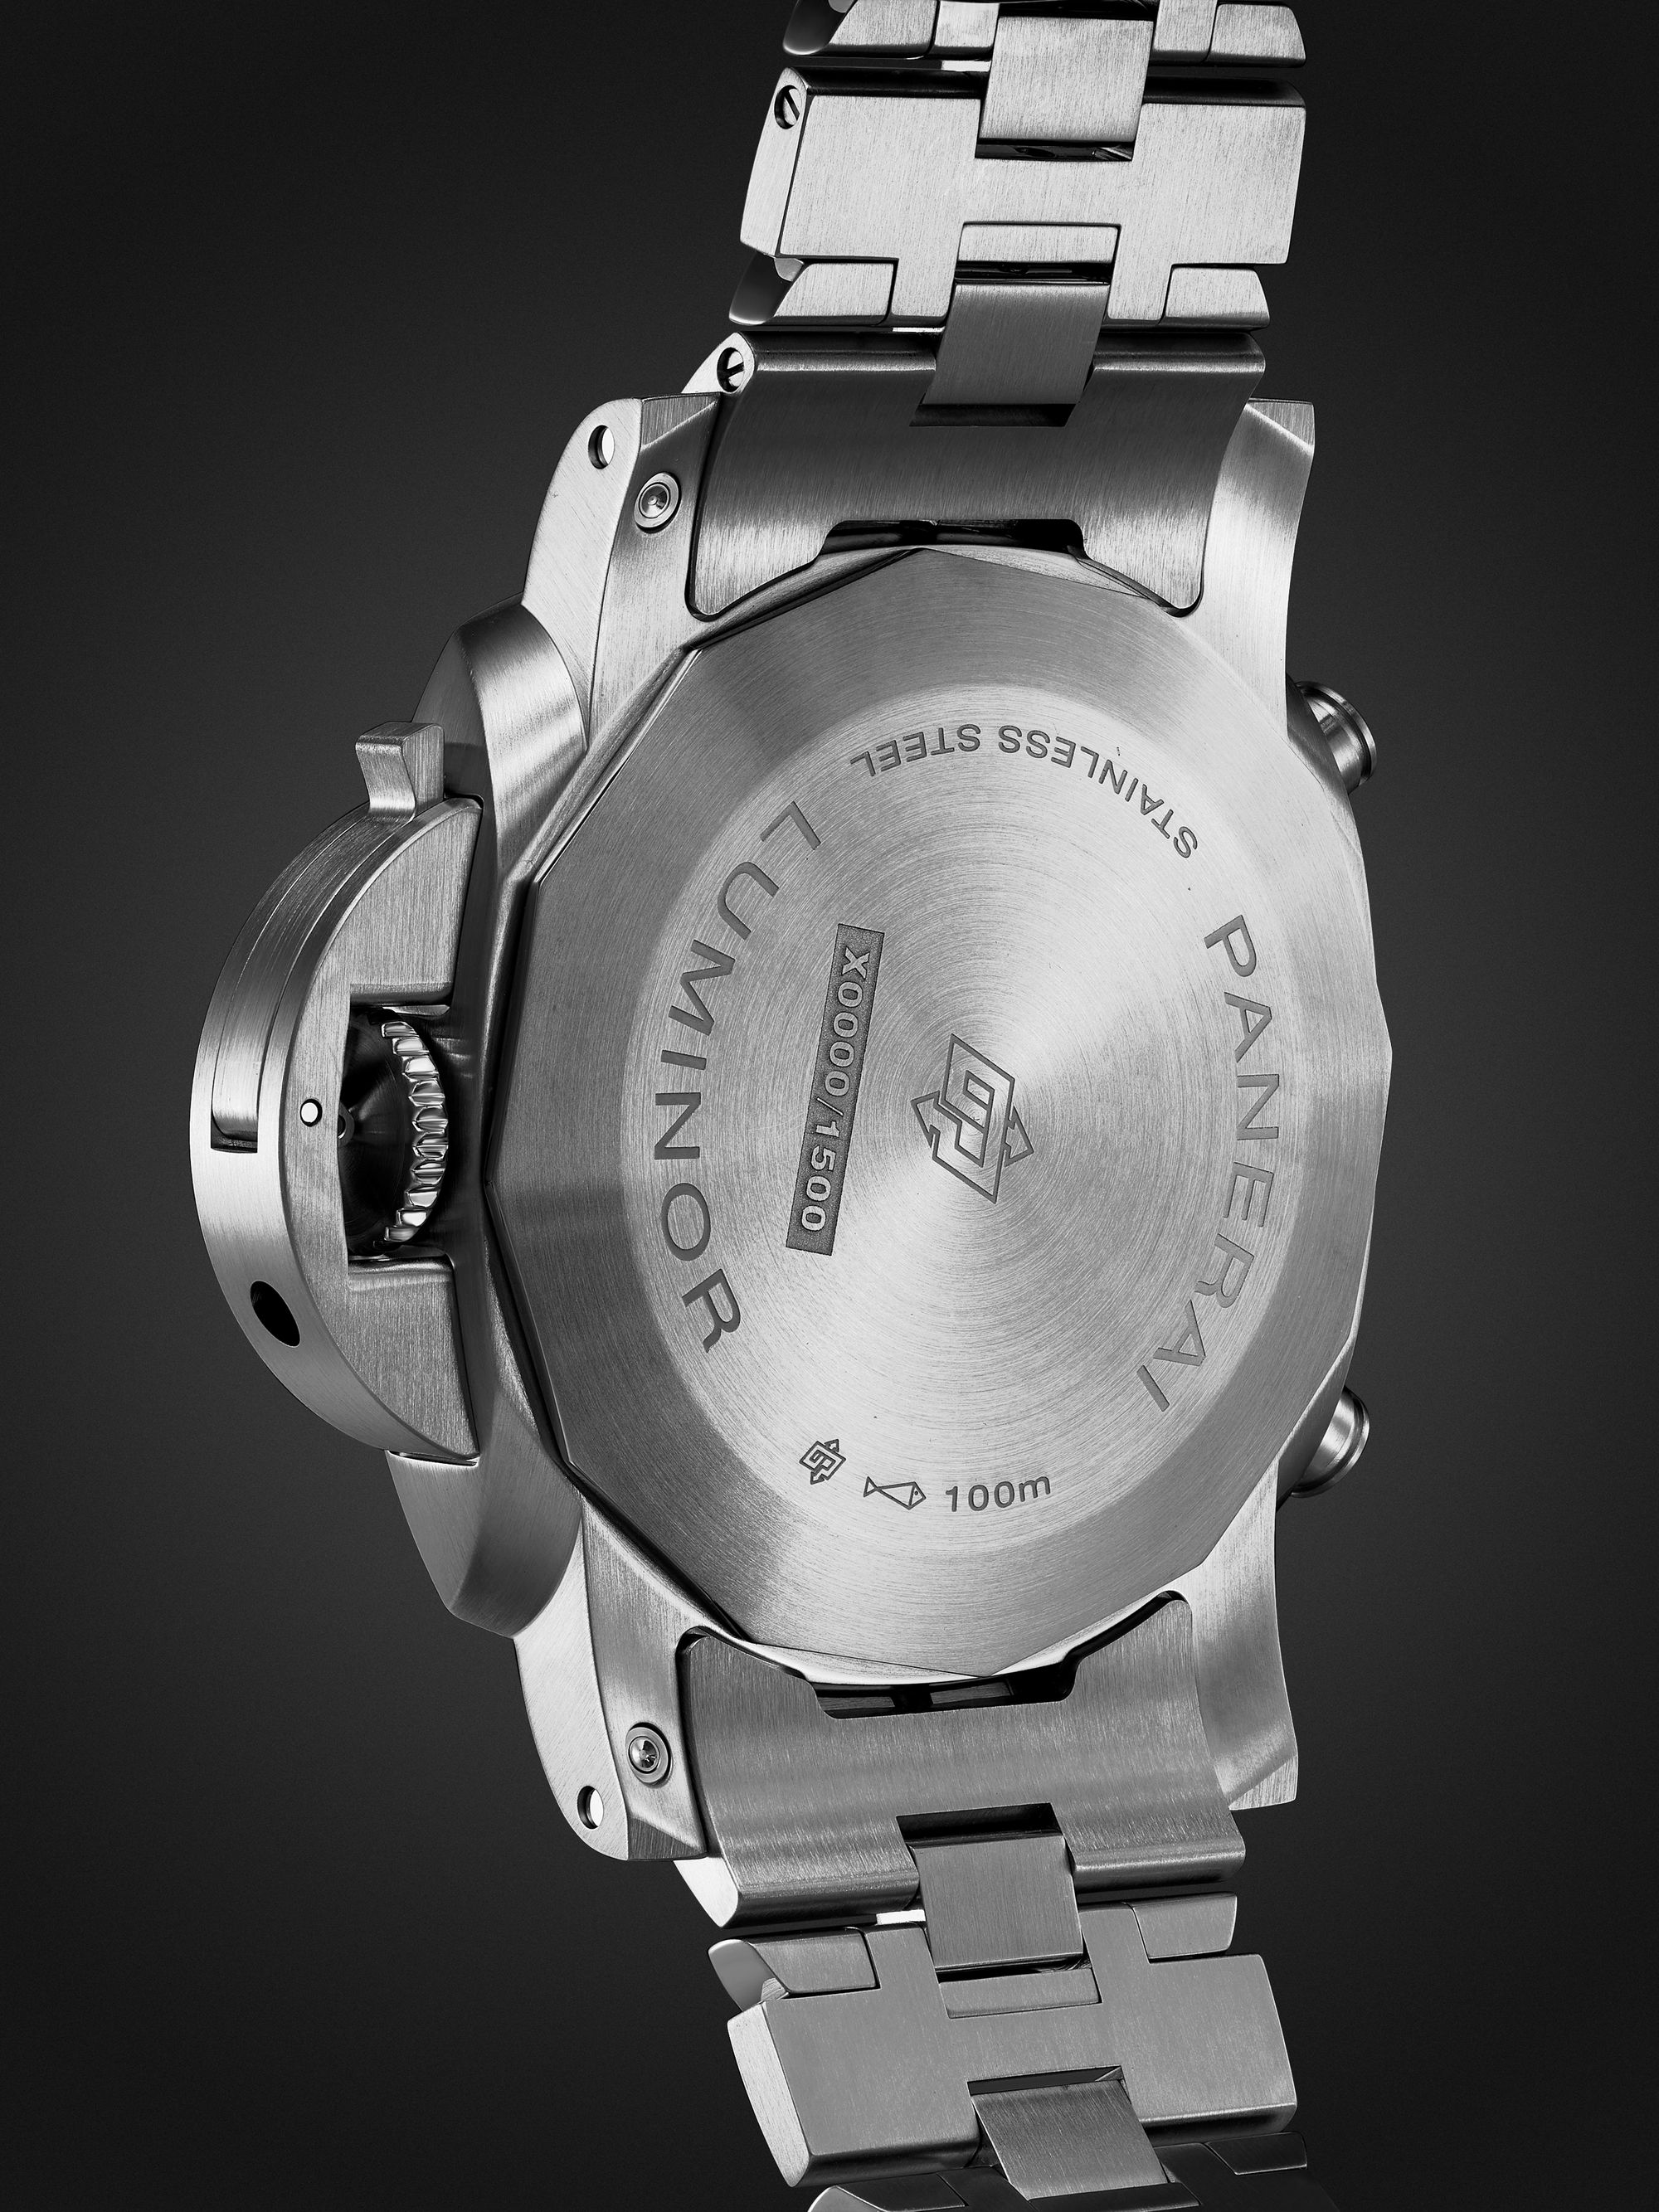 PANERAI Luminor Chrono Automatic Chronograph 44mm Stainless Steel Watch, Ref. No. PAM01110